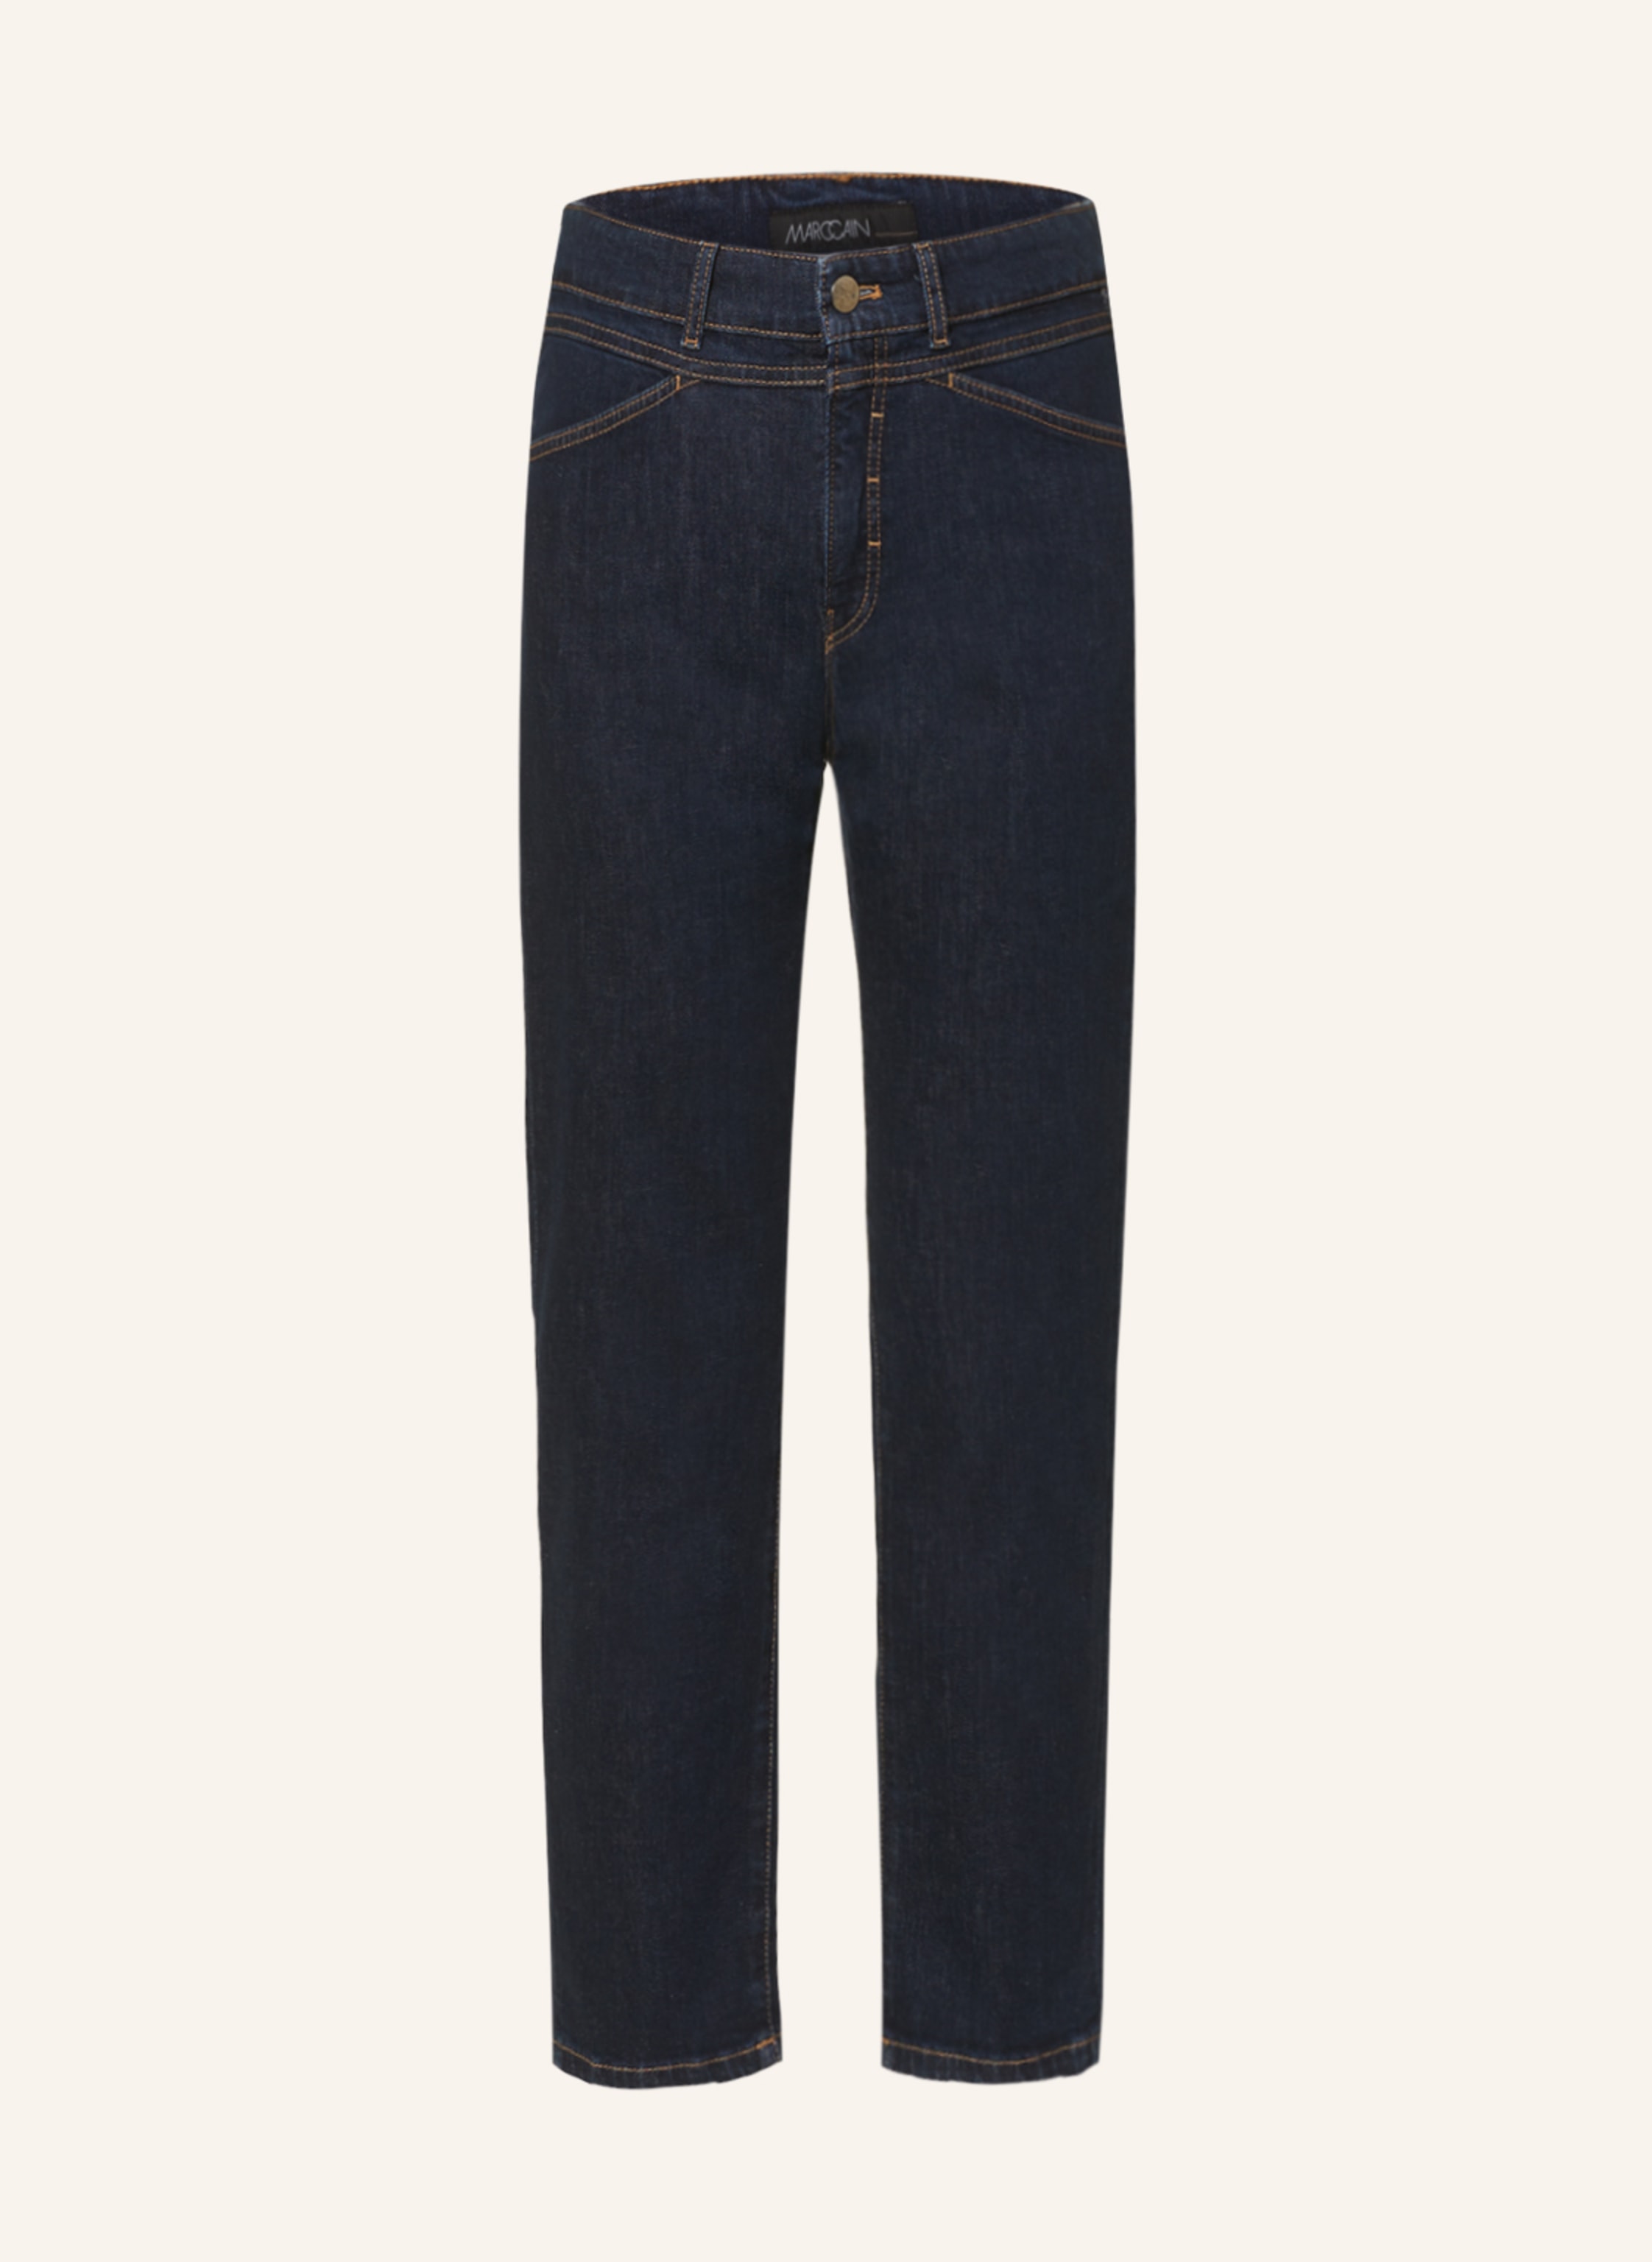 MARC CAIN Jeans RIAD in 357 vintage indigo